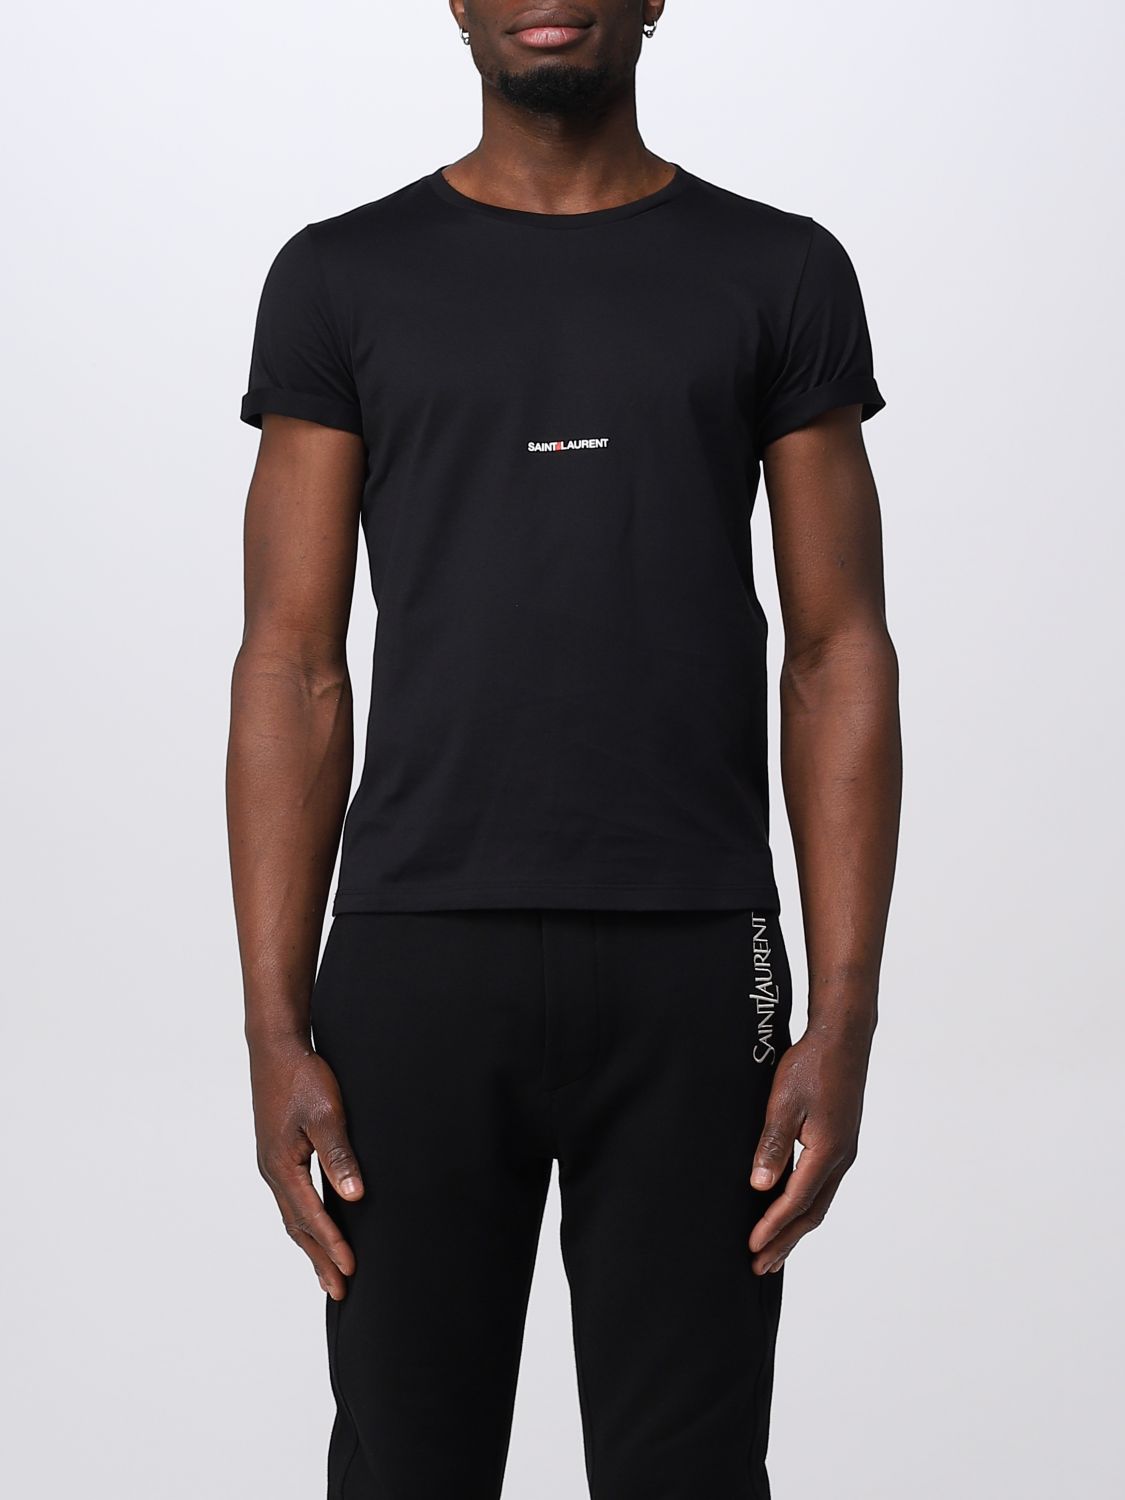 Saint Laurent: T-Shirt For Men - Black | Saint Laurent T-Shirt 464572Yb2Dq  Online On Giglio.Com